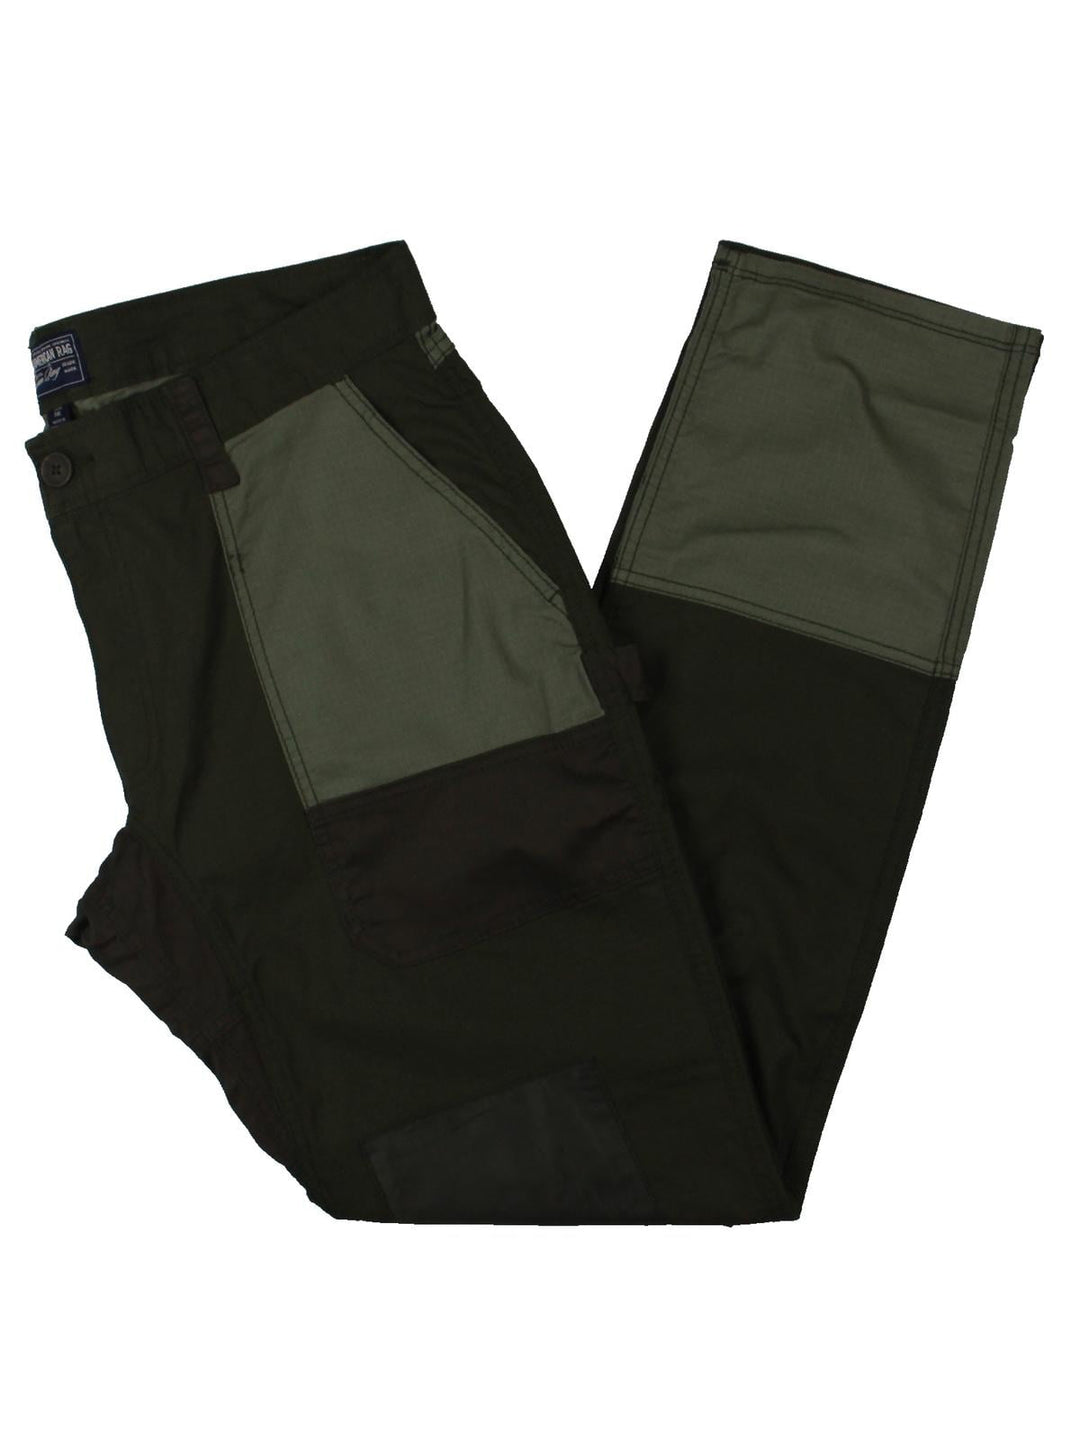 American Rag Men's Mixed Media Slim Fit Casual Pants Green Size 30X32